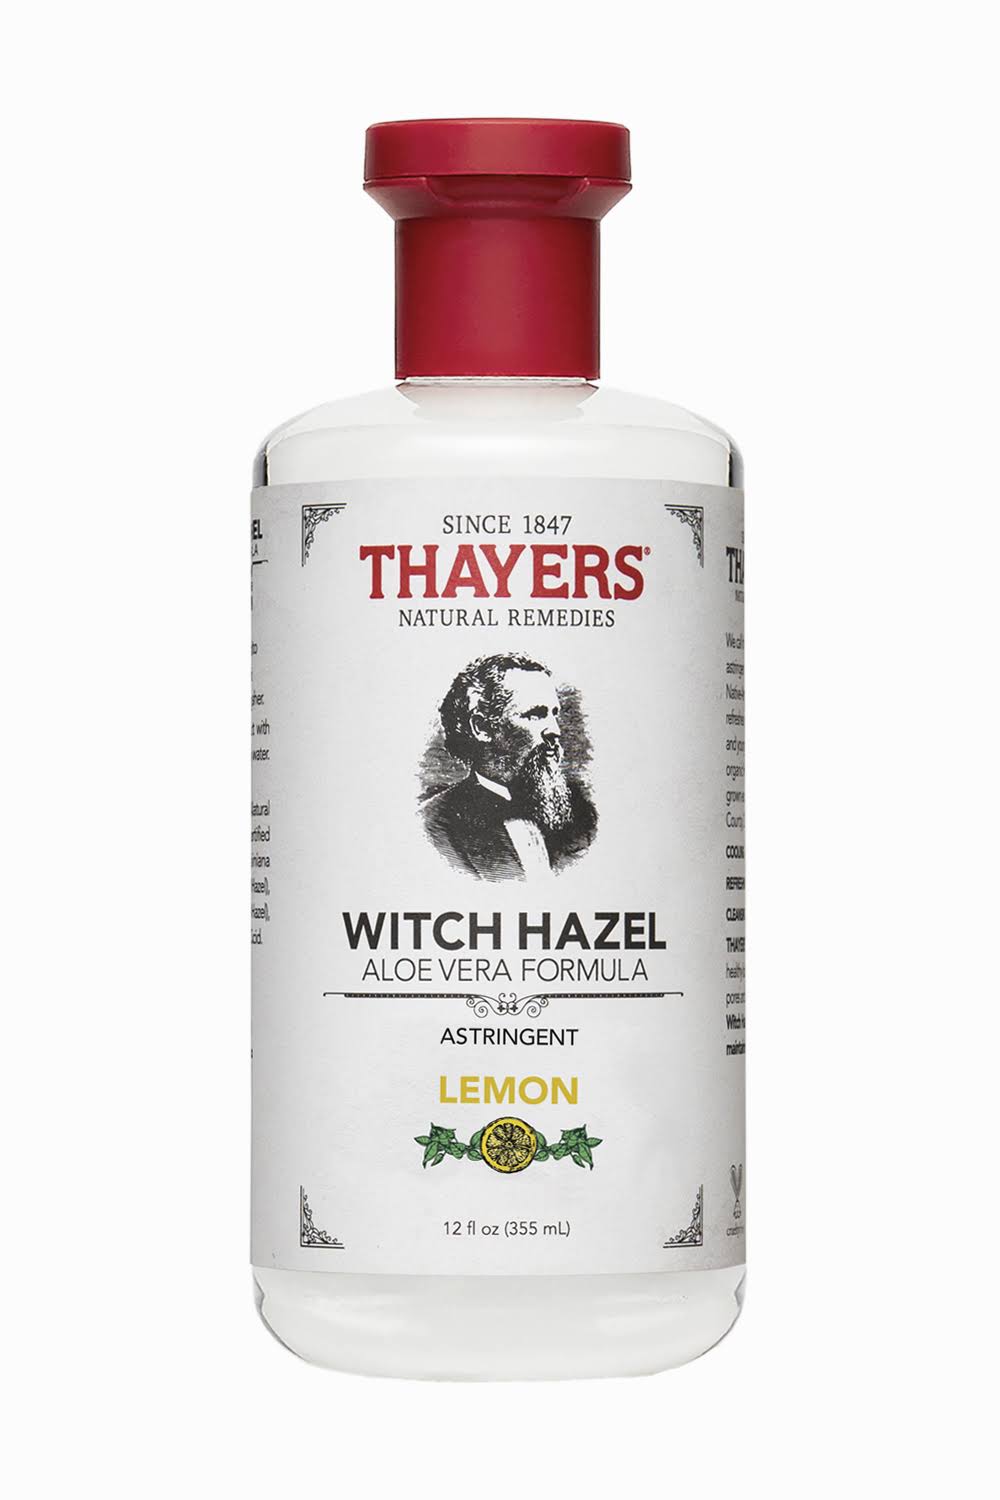 Thayers Witch Hazel Astringent - Lemon, 355ml